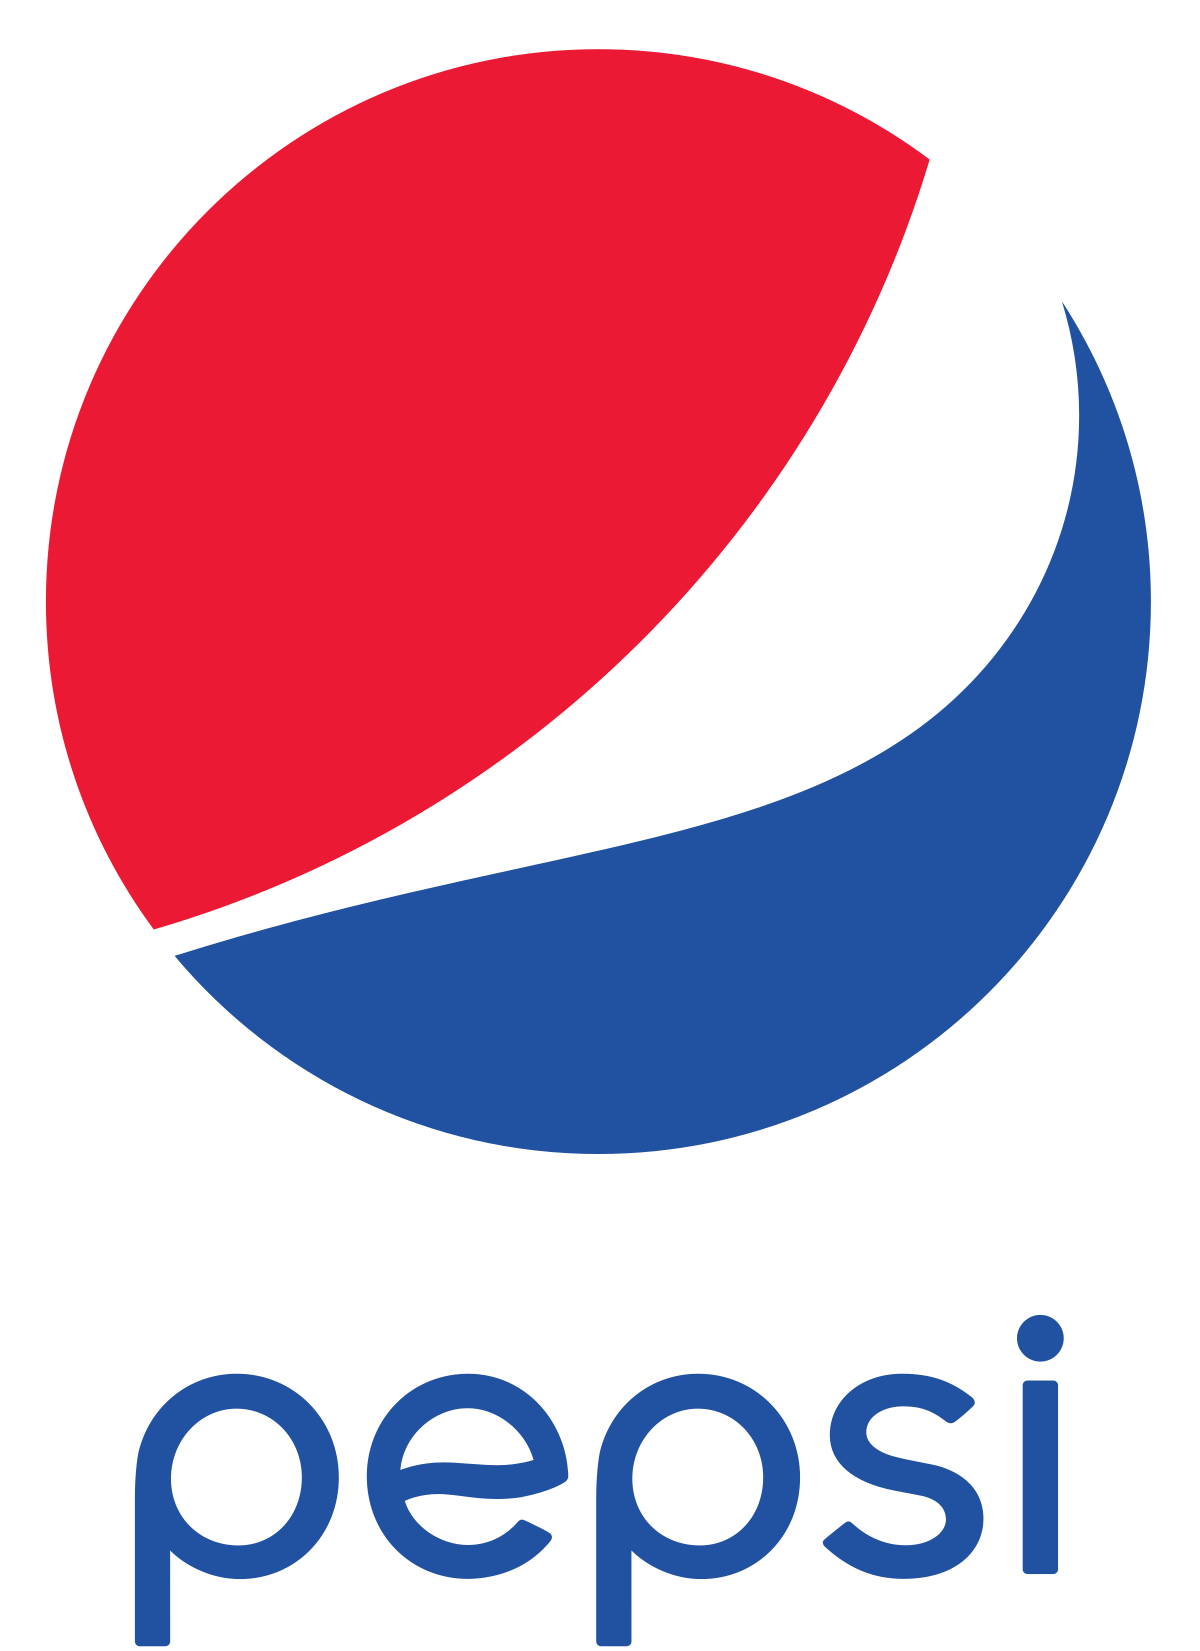 Pepsi_logo_2014.svg_